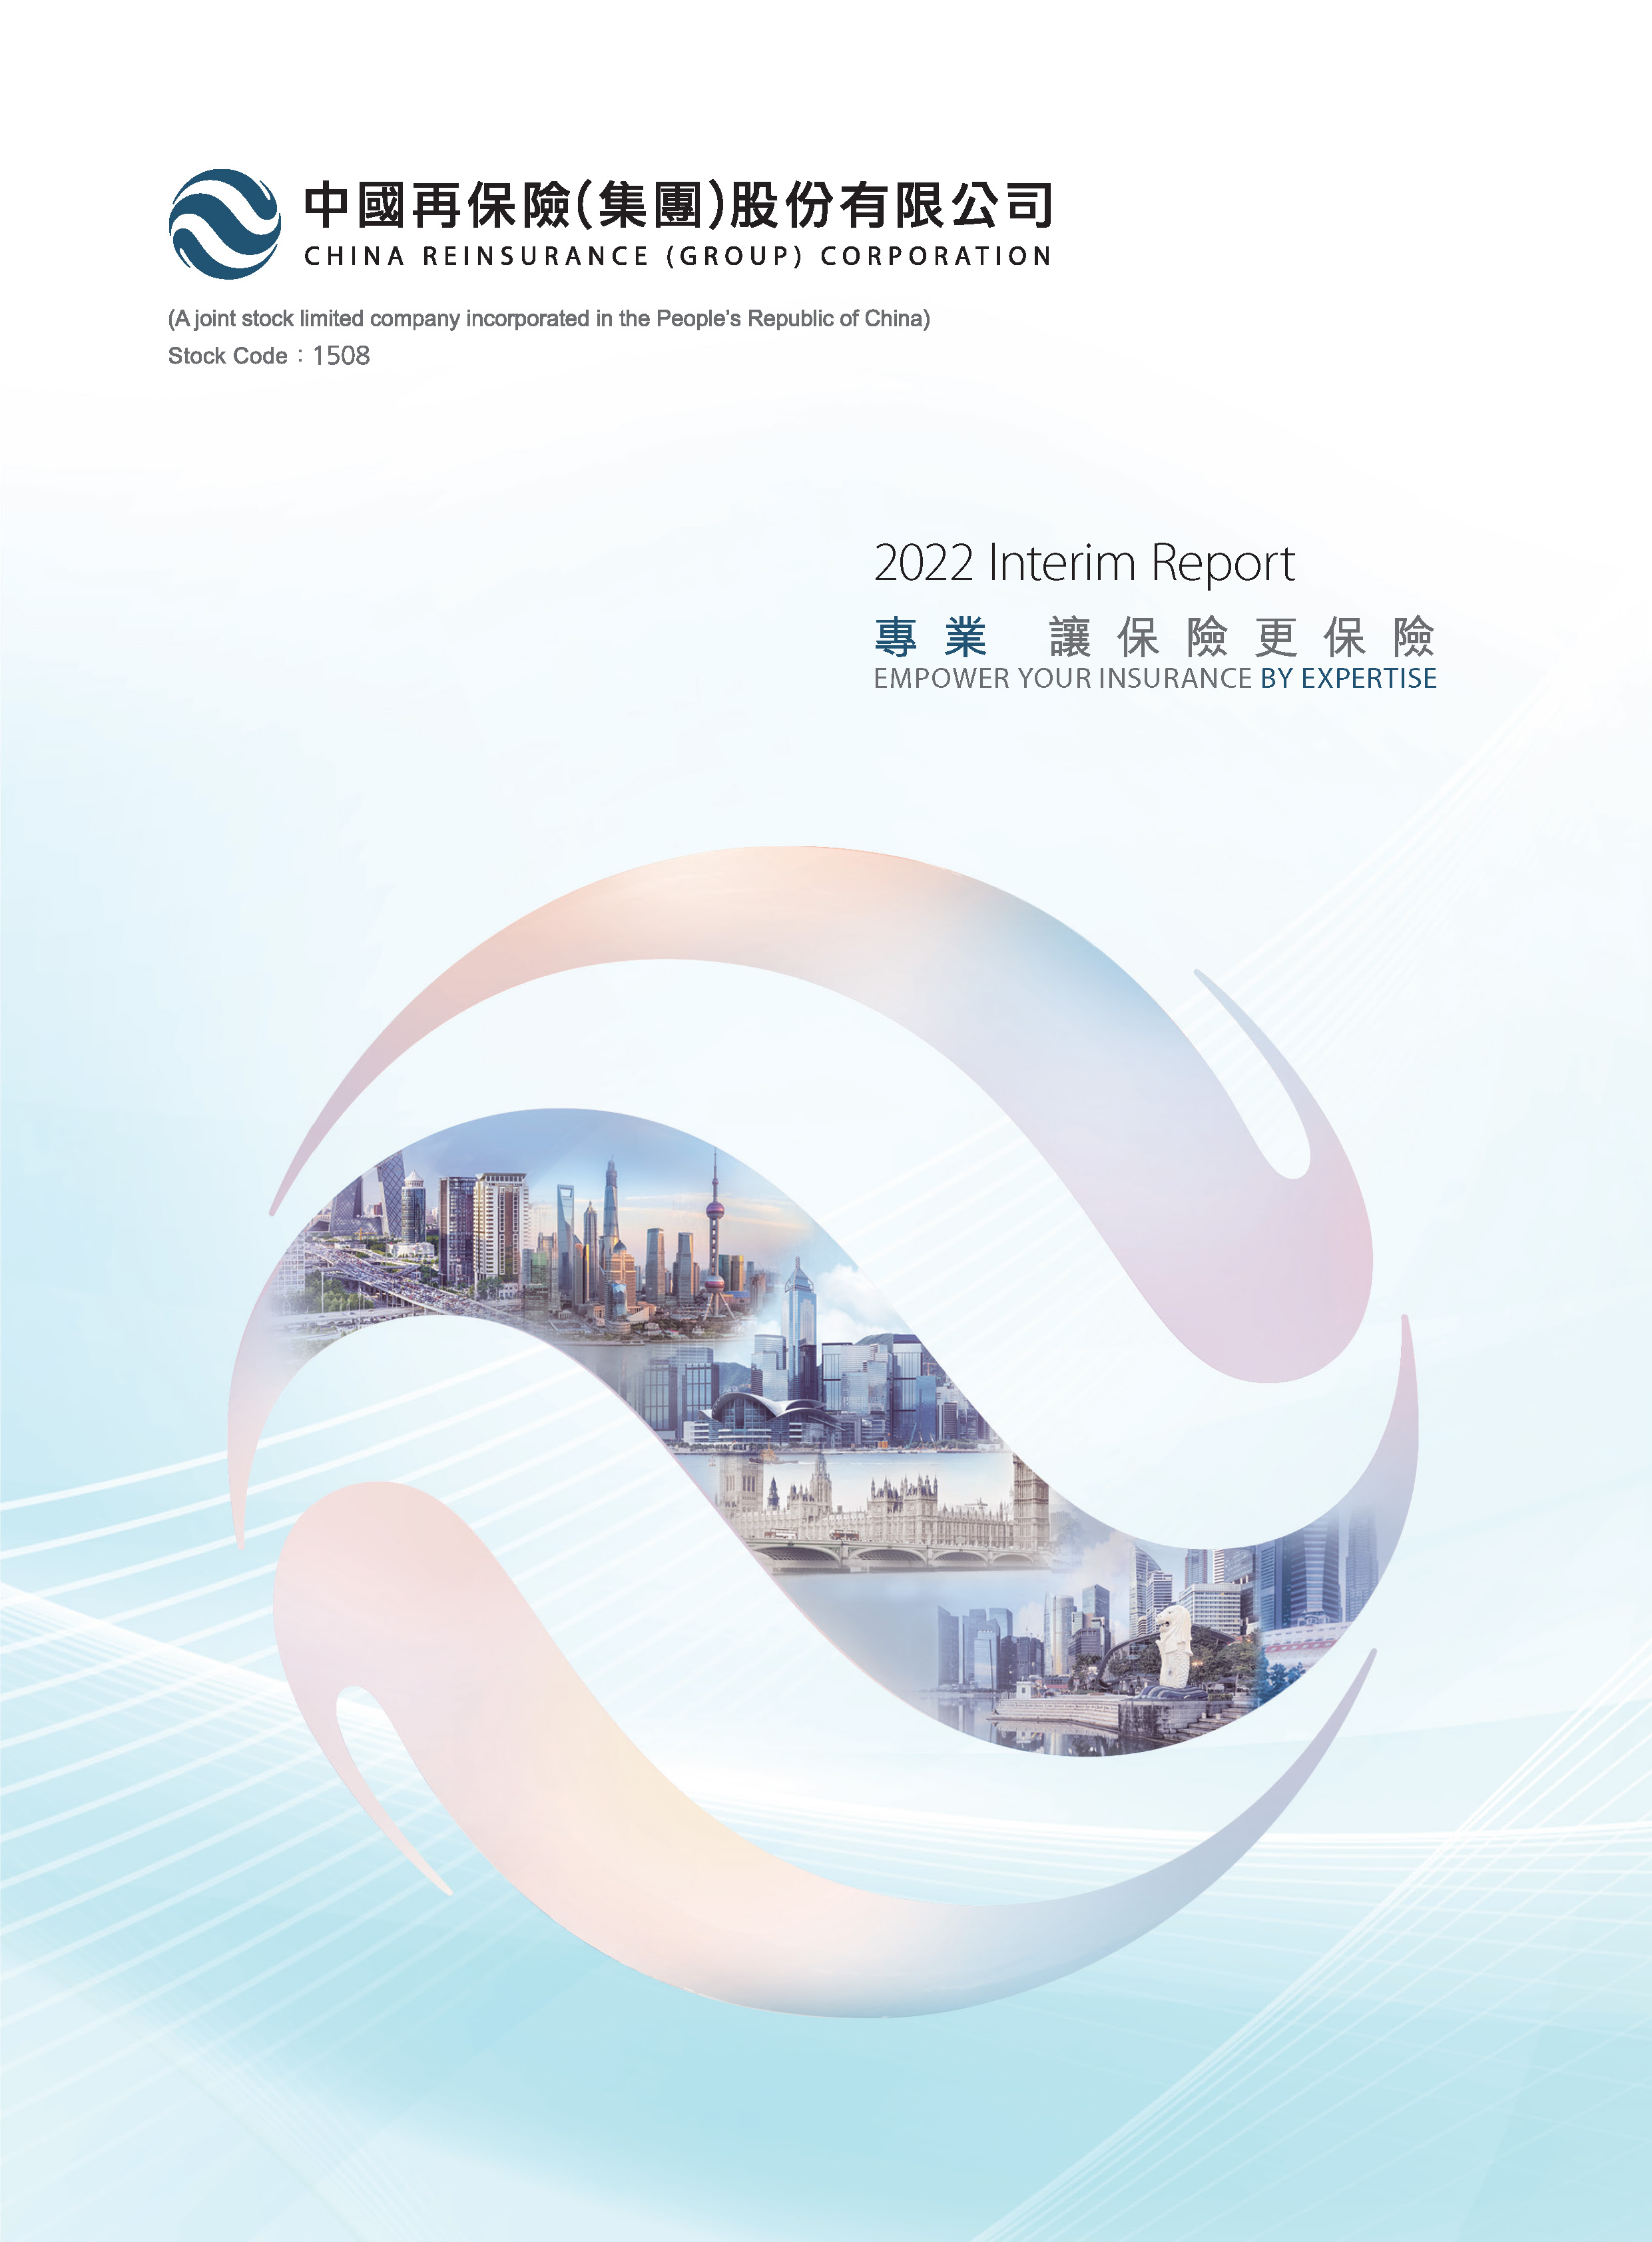 China Reinsurance (Group) Corporation 2022 Interim Report